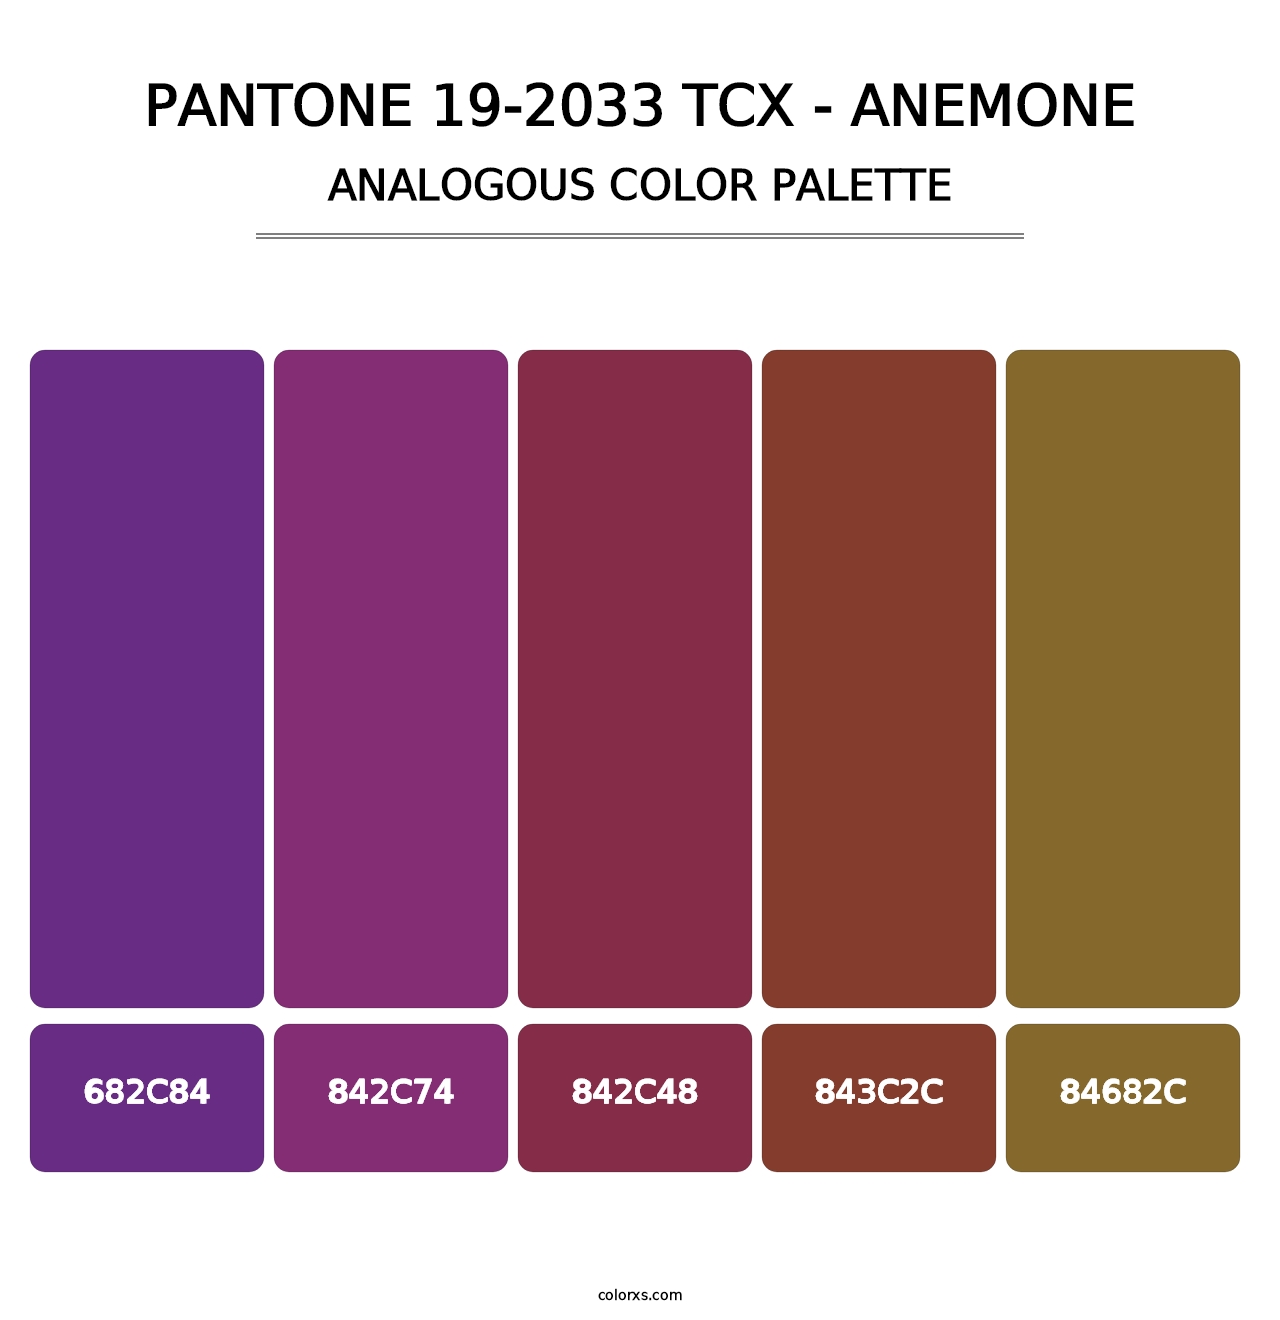 PANTONE 19-2033 TCX - Anemone - Analogous Color Palette